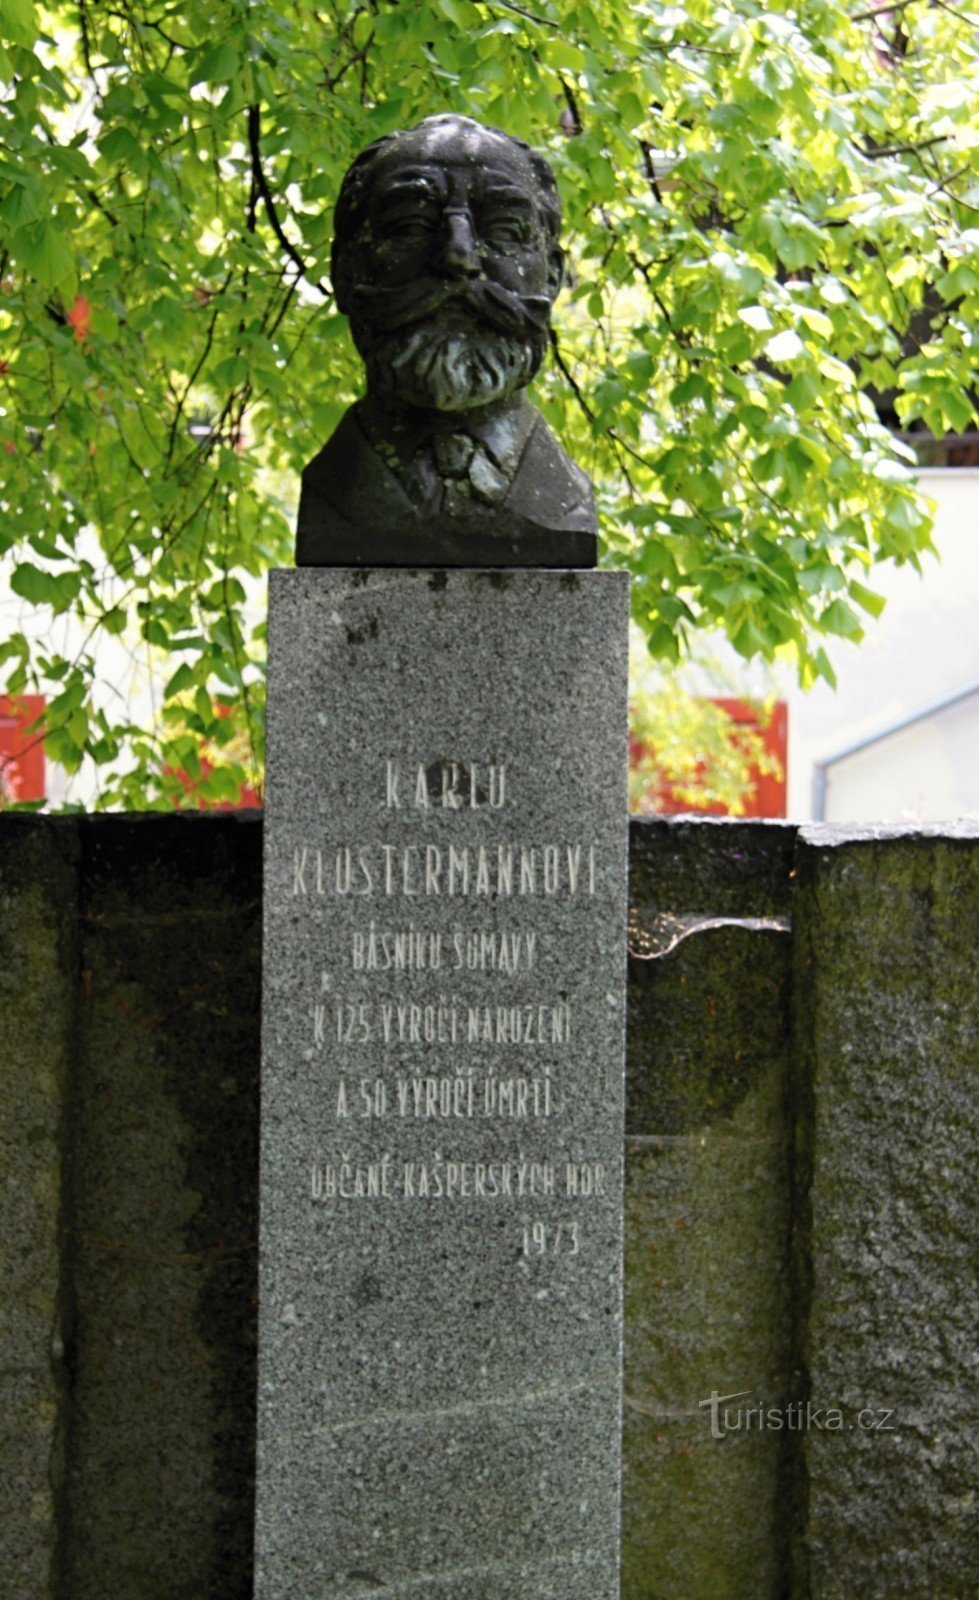 Monument till Karel Klostrmann